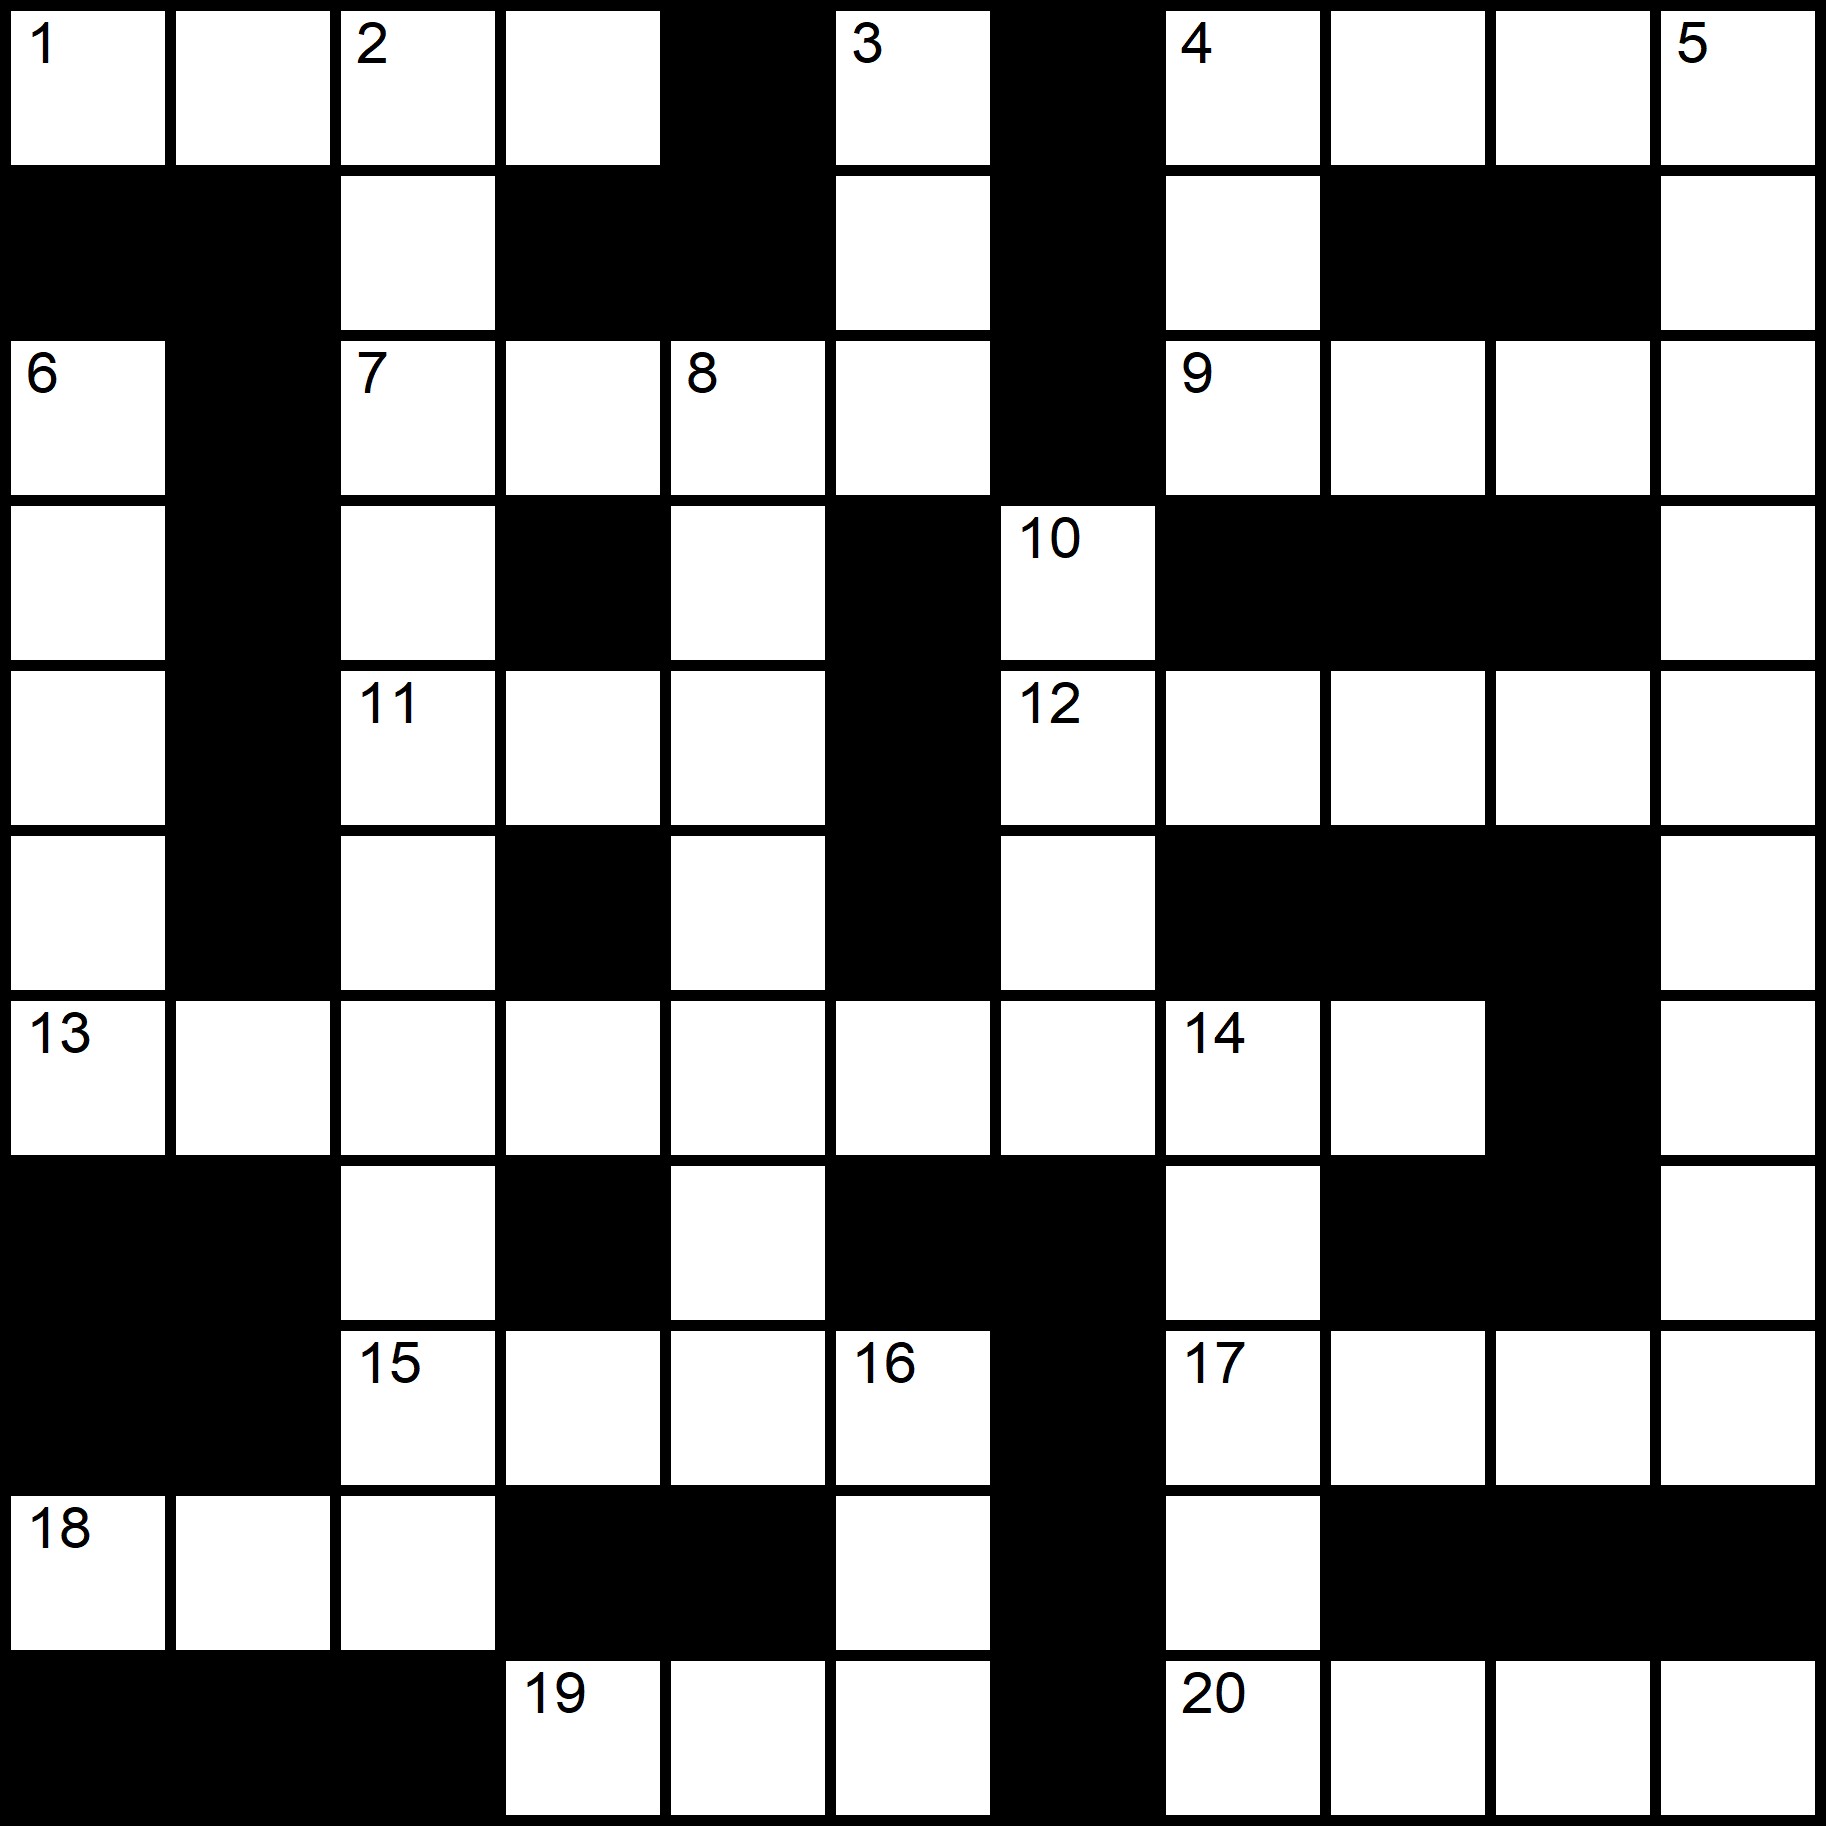 Simple Crossword Puzzles -
Placidus Flora - Crossword number twenty-two